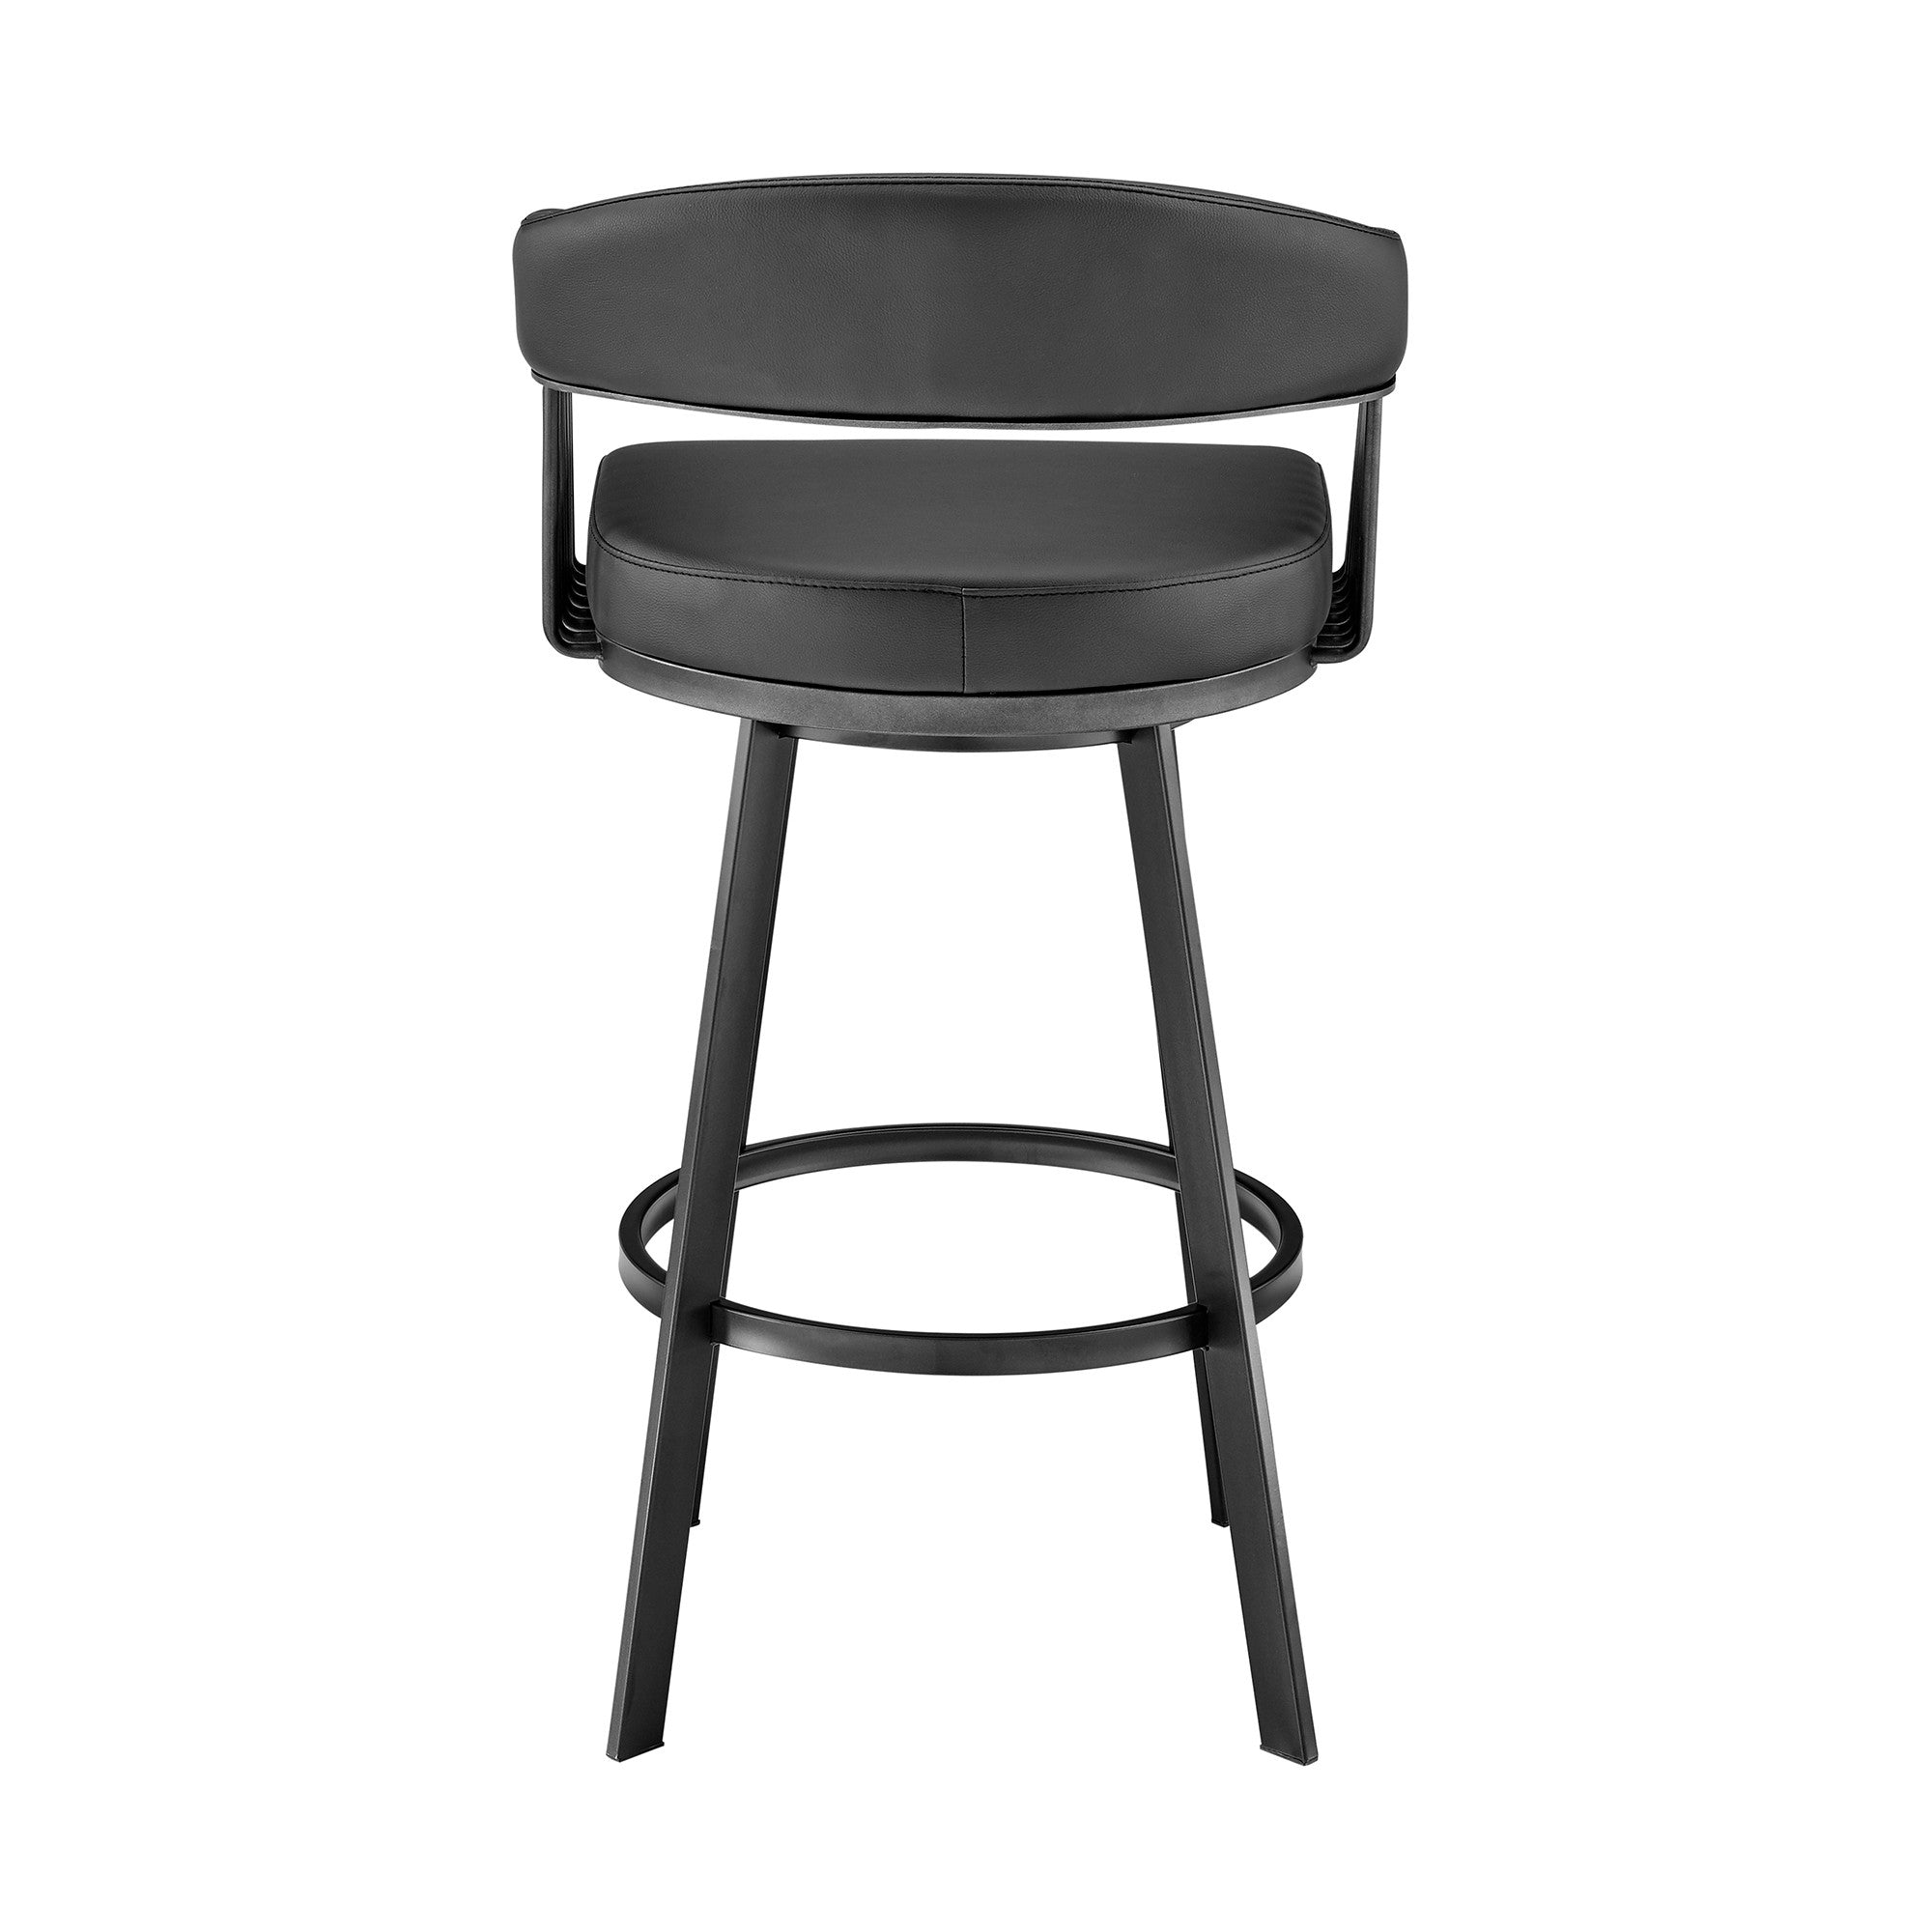 29" Black Iron Swivel Low Back Bar Height Bar Chair